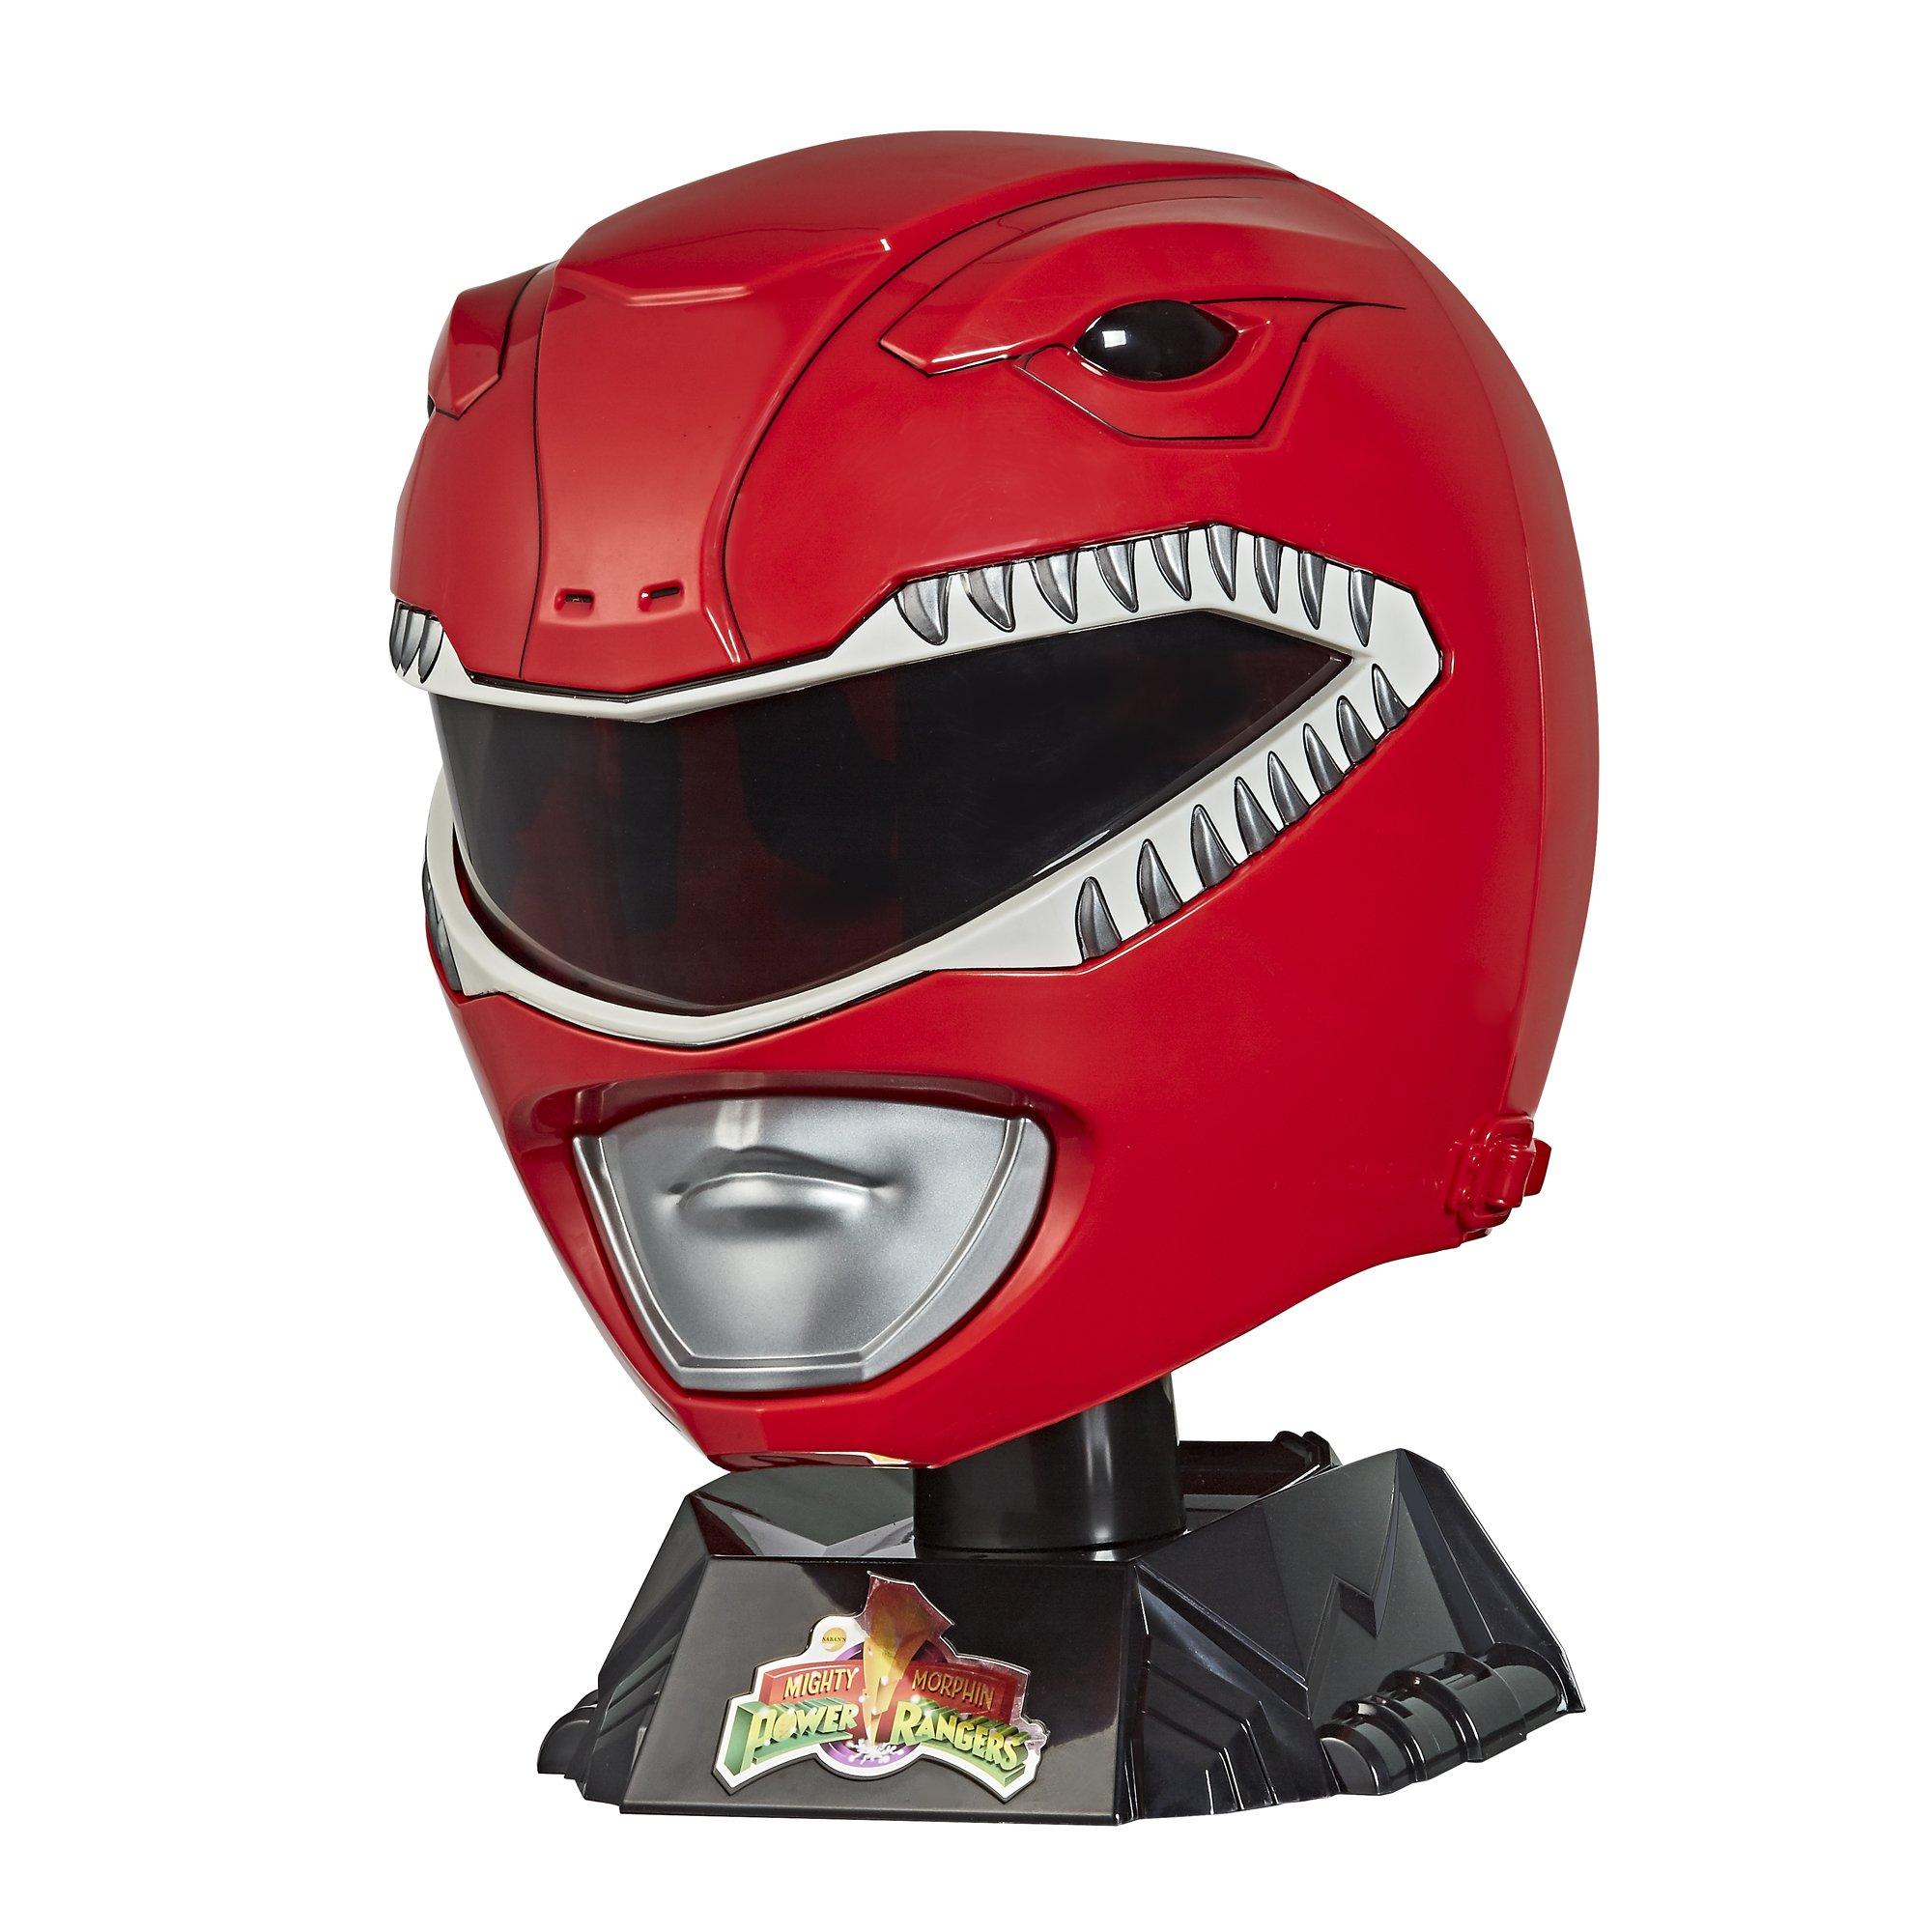 Hasbro Mighty Morphin Power Rangers Lightning Collection Red Ranger Helmet